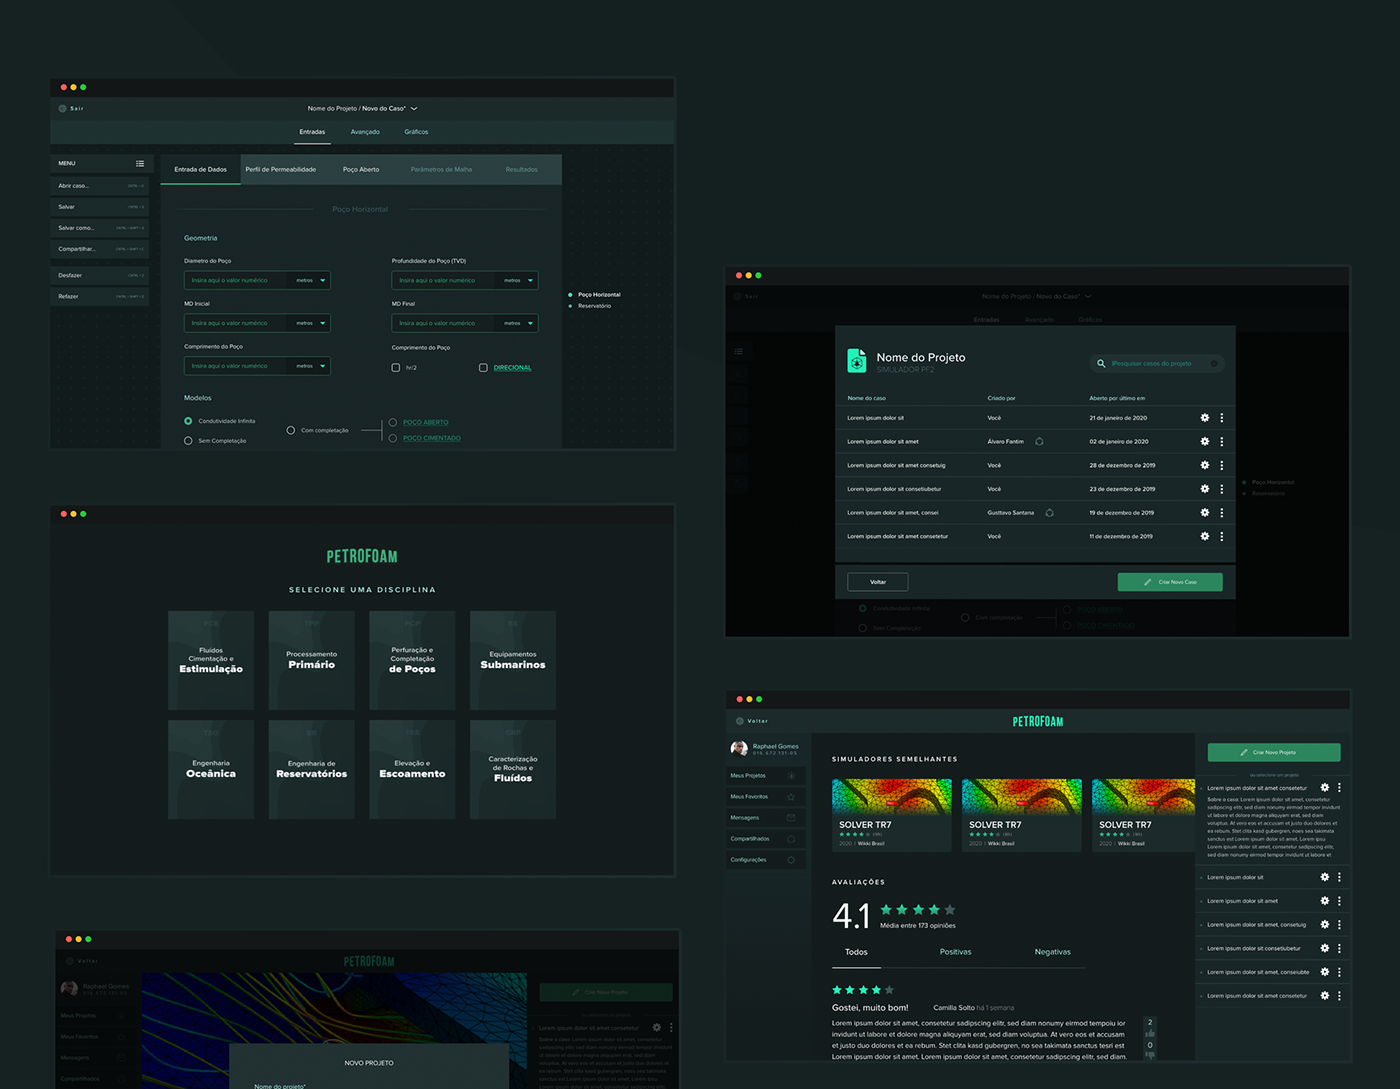 Adobe XD dark mode design system Interface oil petrobras simulator ui design ui kit UX design